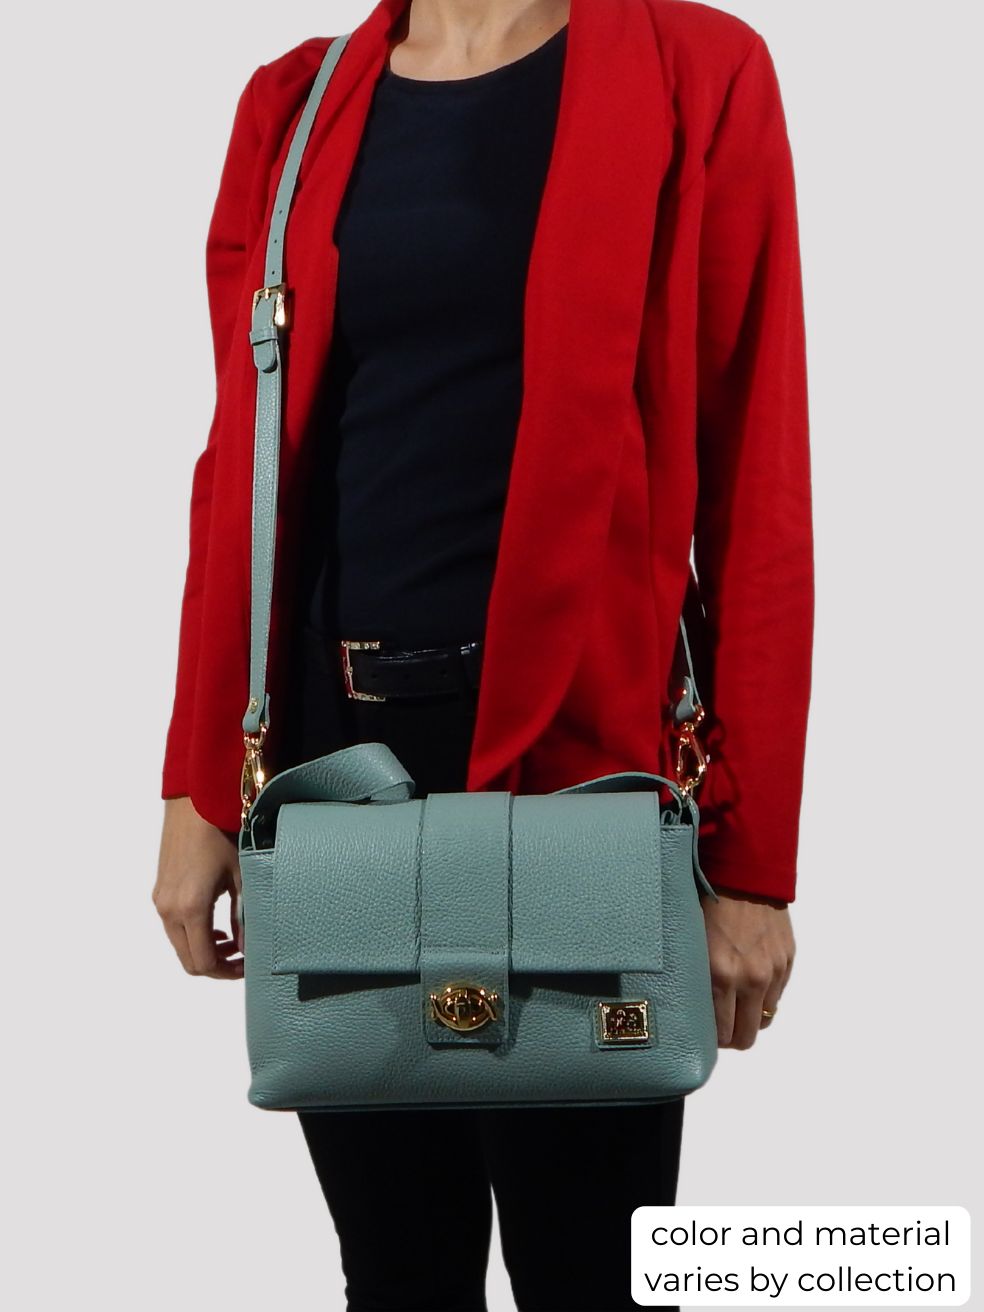 #color_ Red | Cavalinho Gallop Patent Leather Handbag - Red - bodyshot_0514_4_6ec7d2c6-9ac8-4a39-9f31-1220a352c501